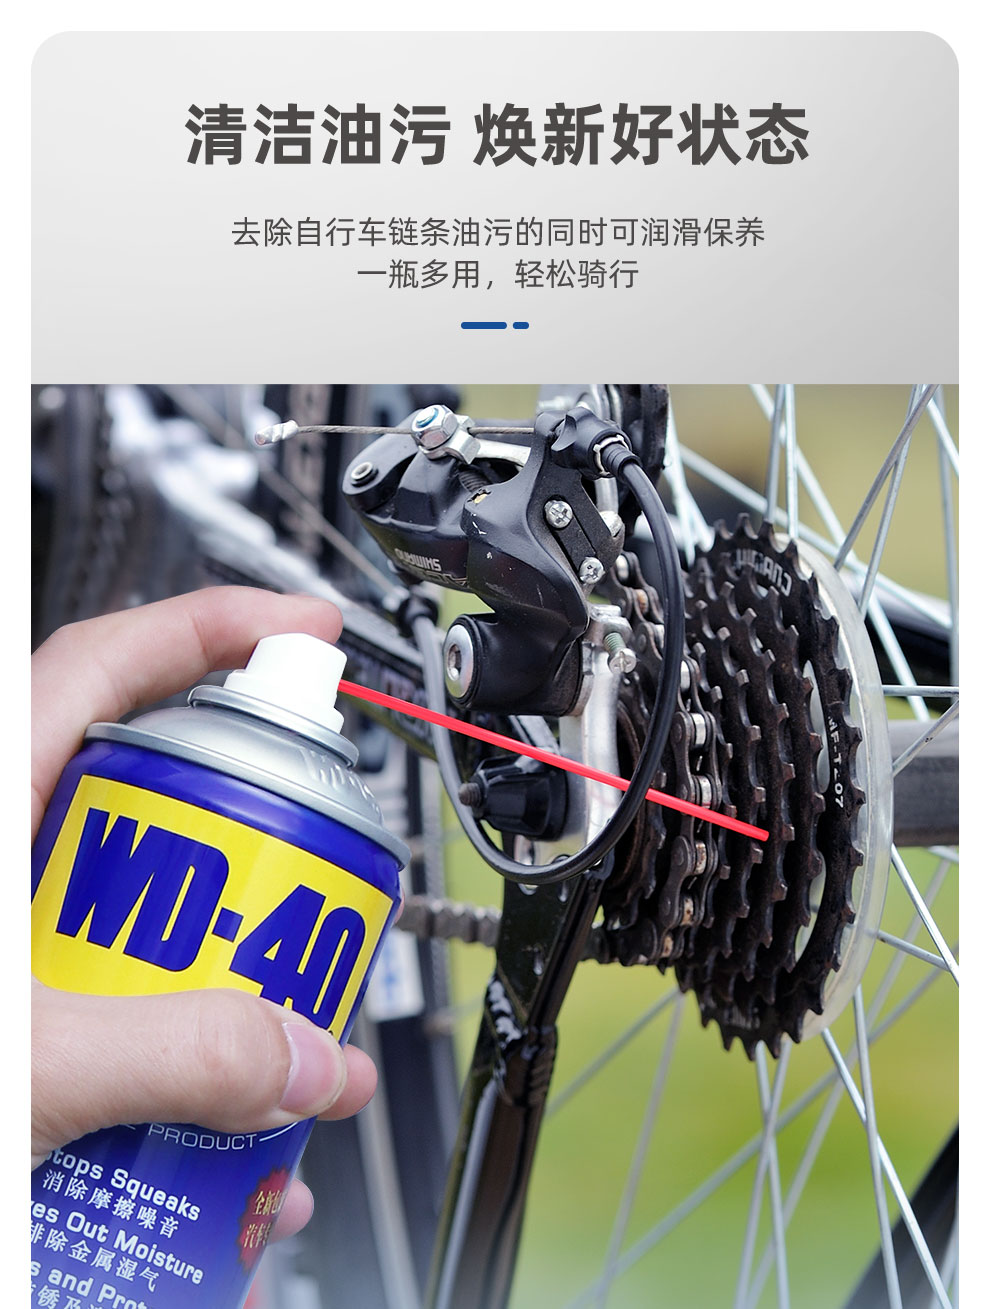 WD-40除锈剂润滑油机械防锈油wd40螺丝松动剂门窗锁自行车清洁400ml